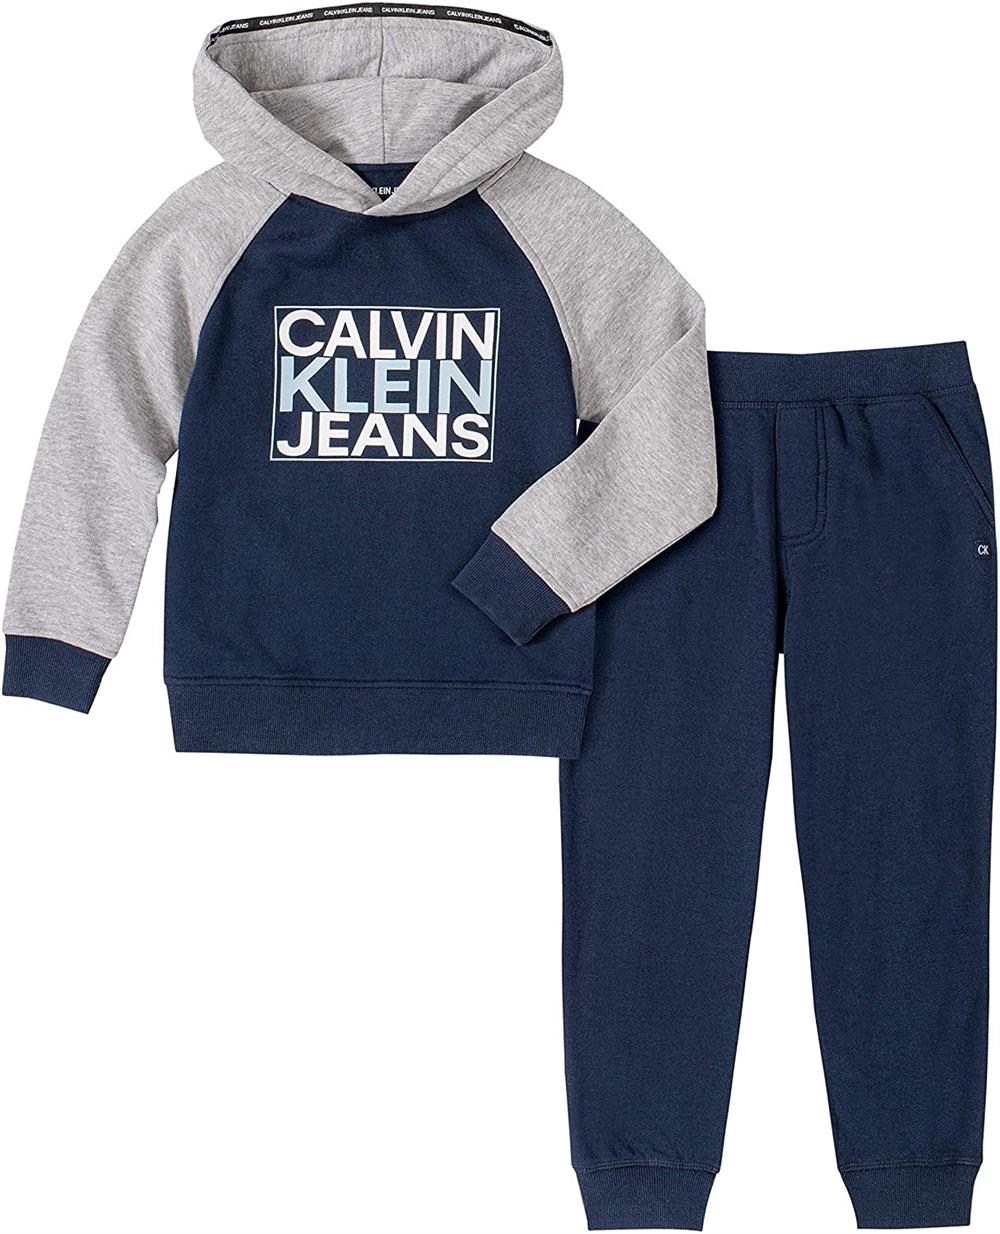 Calvin Klein Boys 12-24 Months 2 Piece Jogger Set